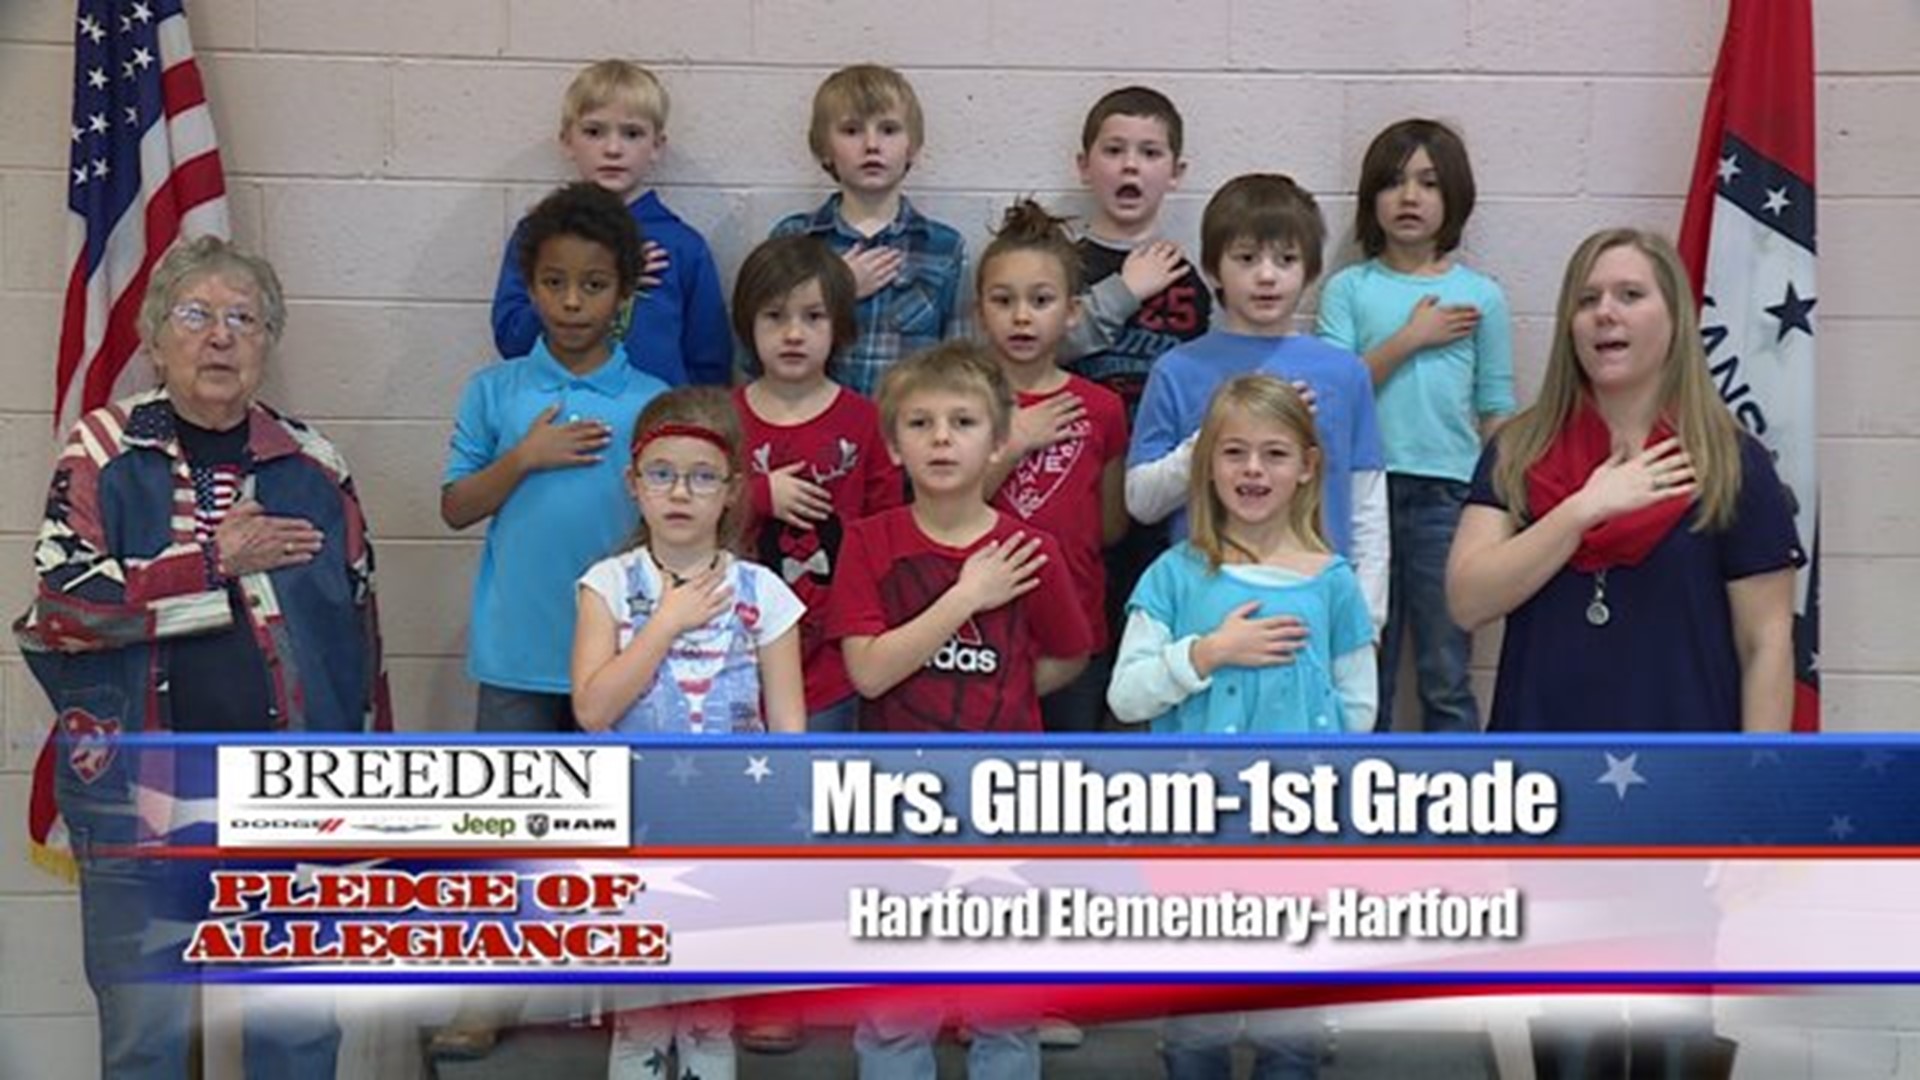 Hartford Elementary, Hartford - Mrs. Gilham - 1st Grade